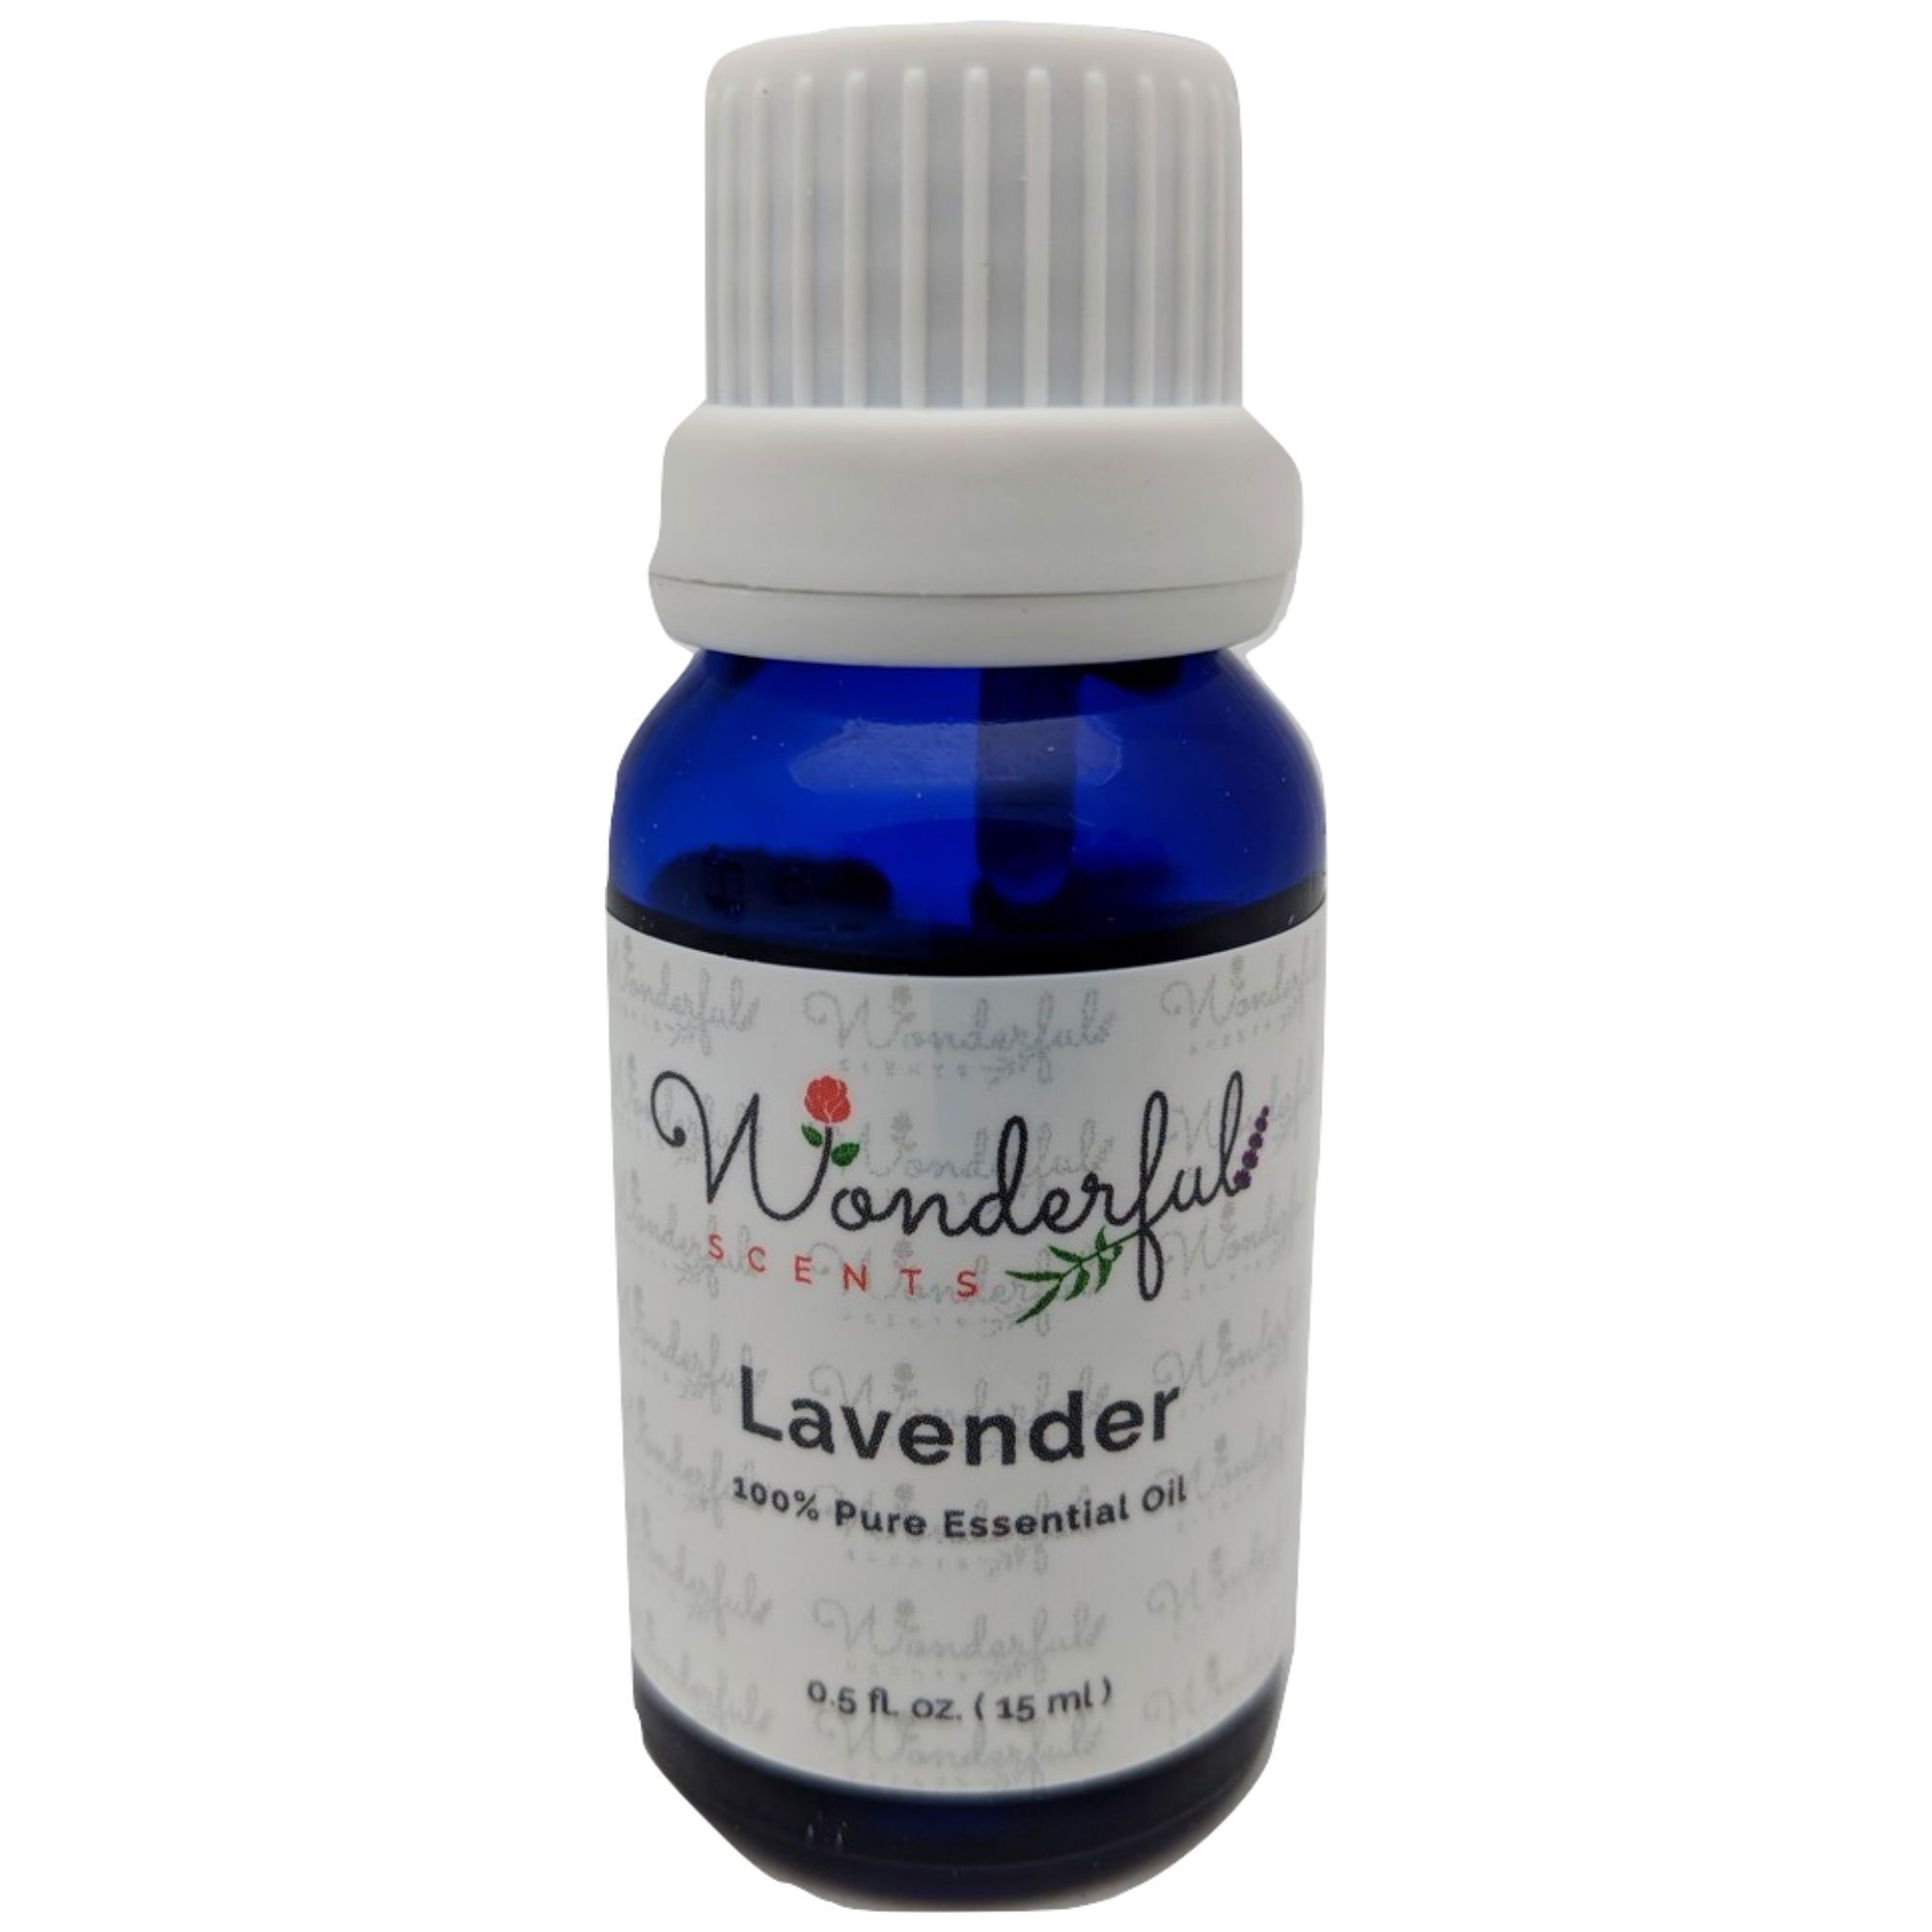 Wonderful Scents Lavender Essential Oil 15 ml Bottle New Label